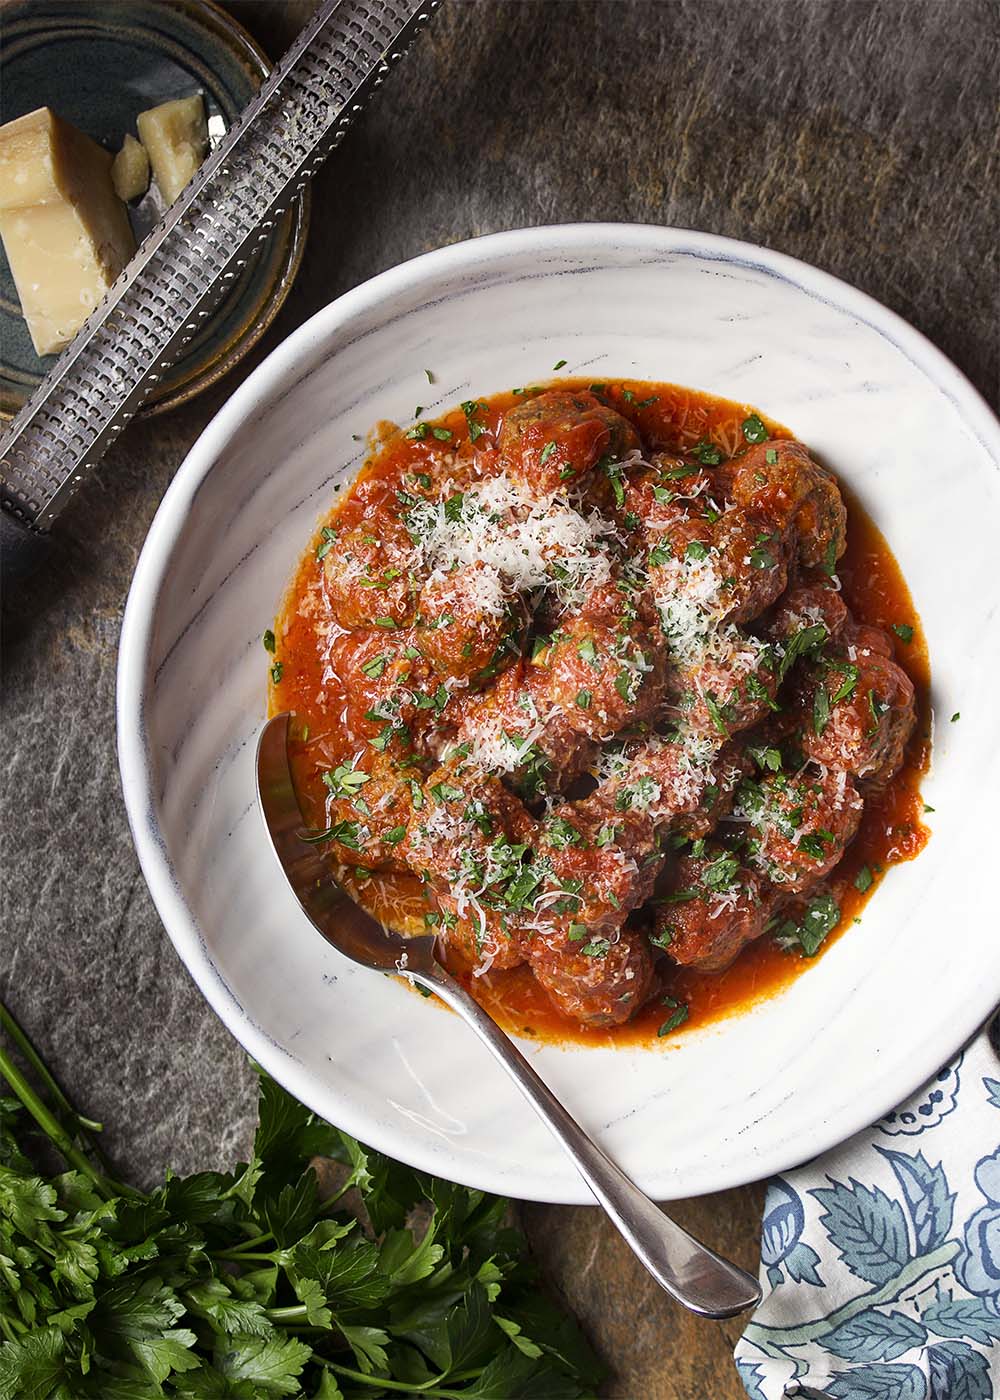 Italian large meatballs